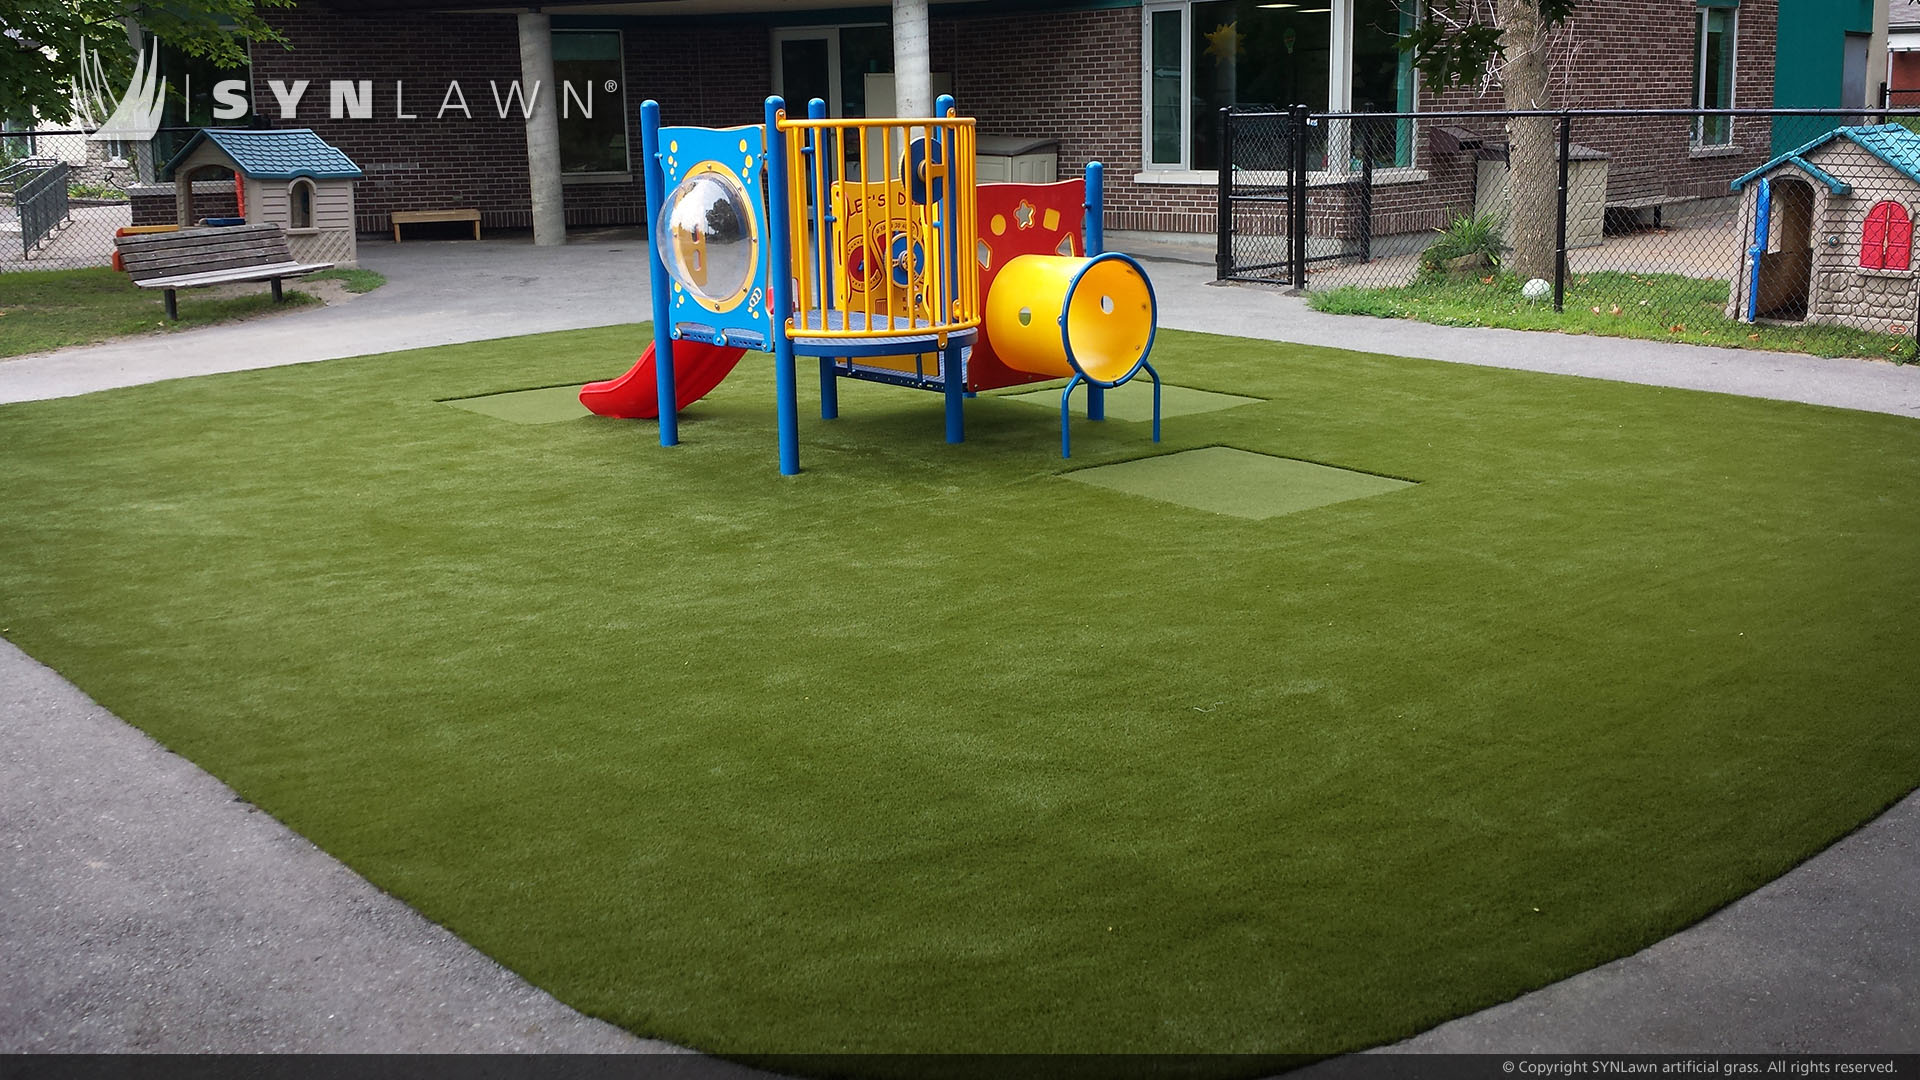 Playground equipment on artificial grass